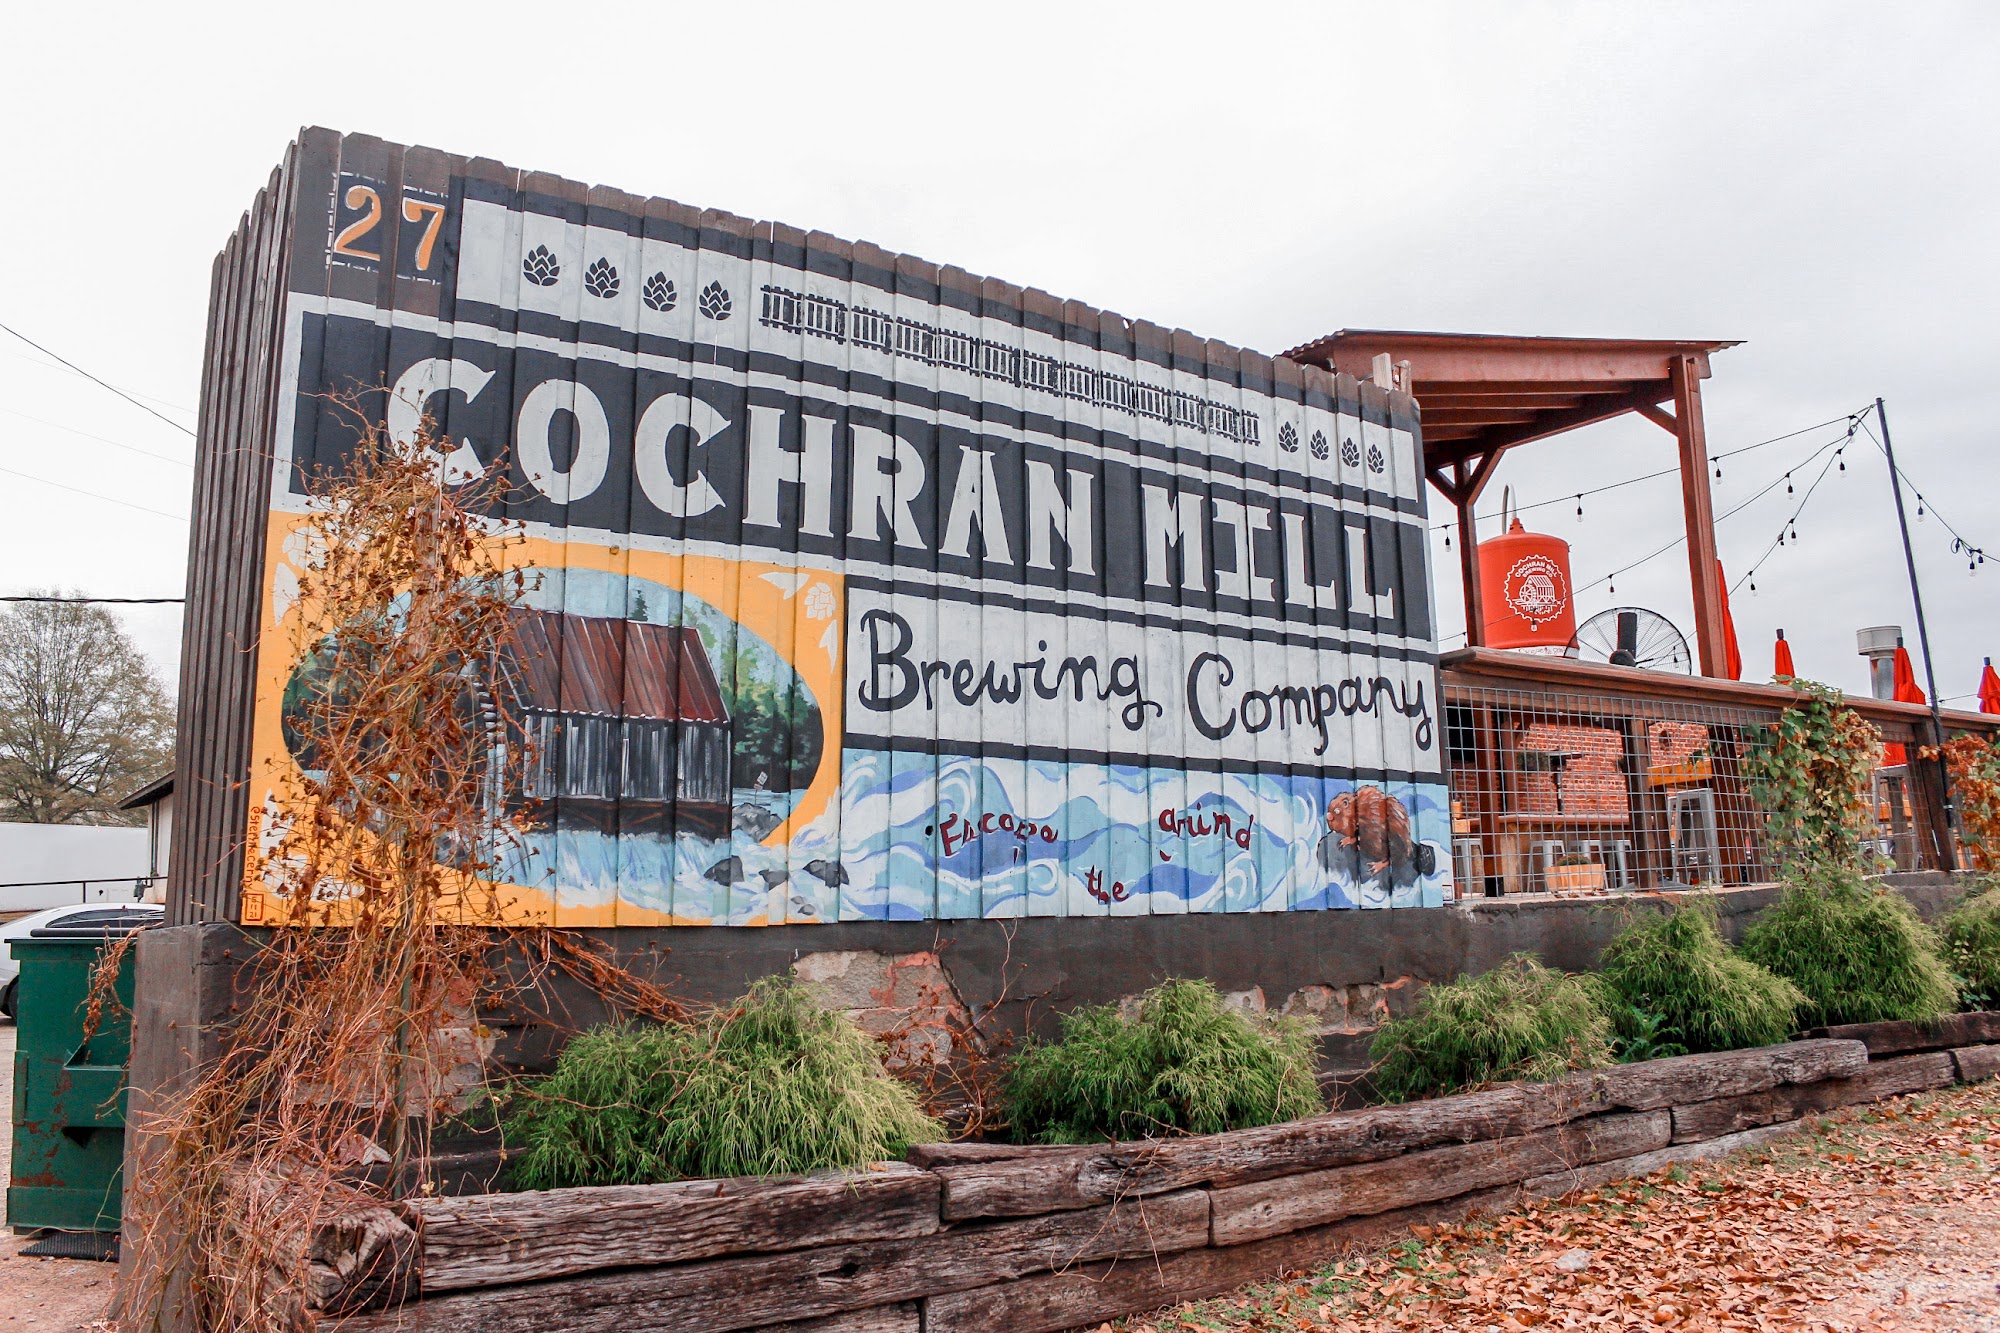 Cochran Mill Brewing Company